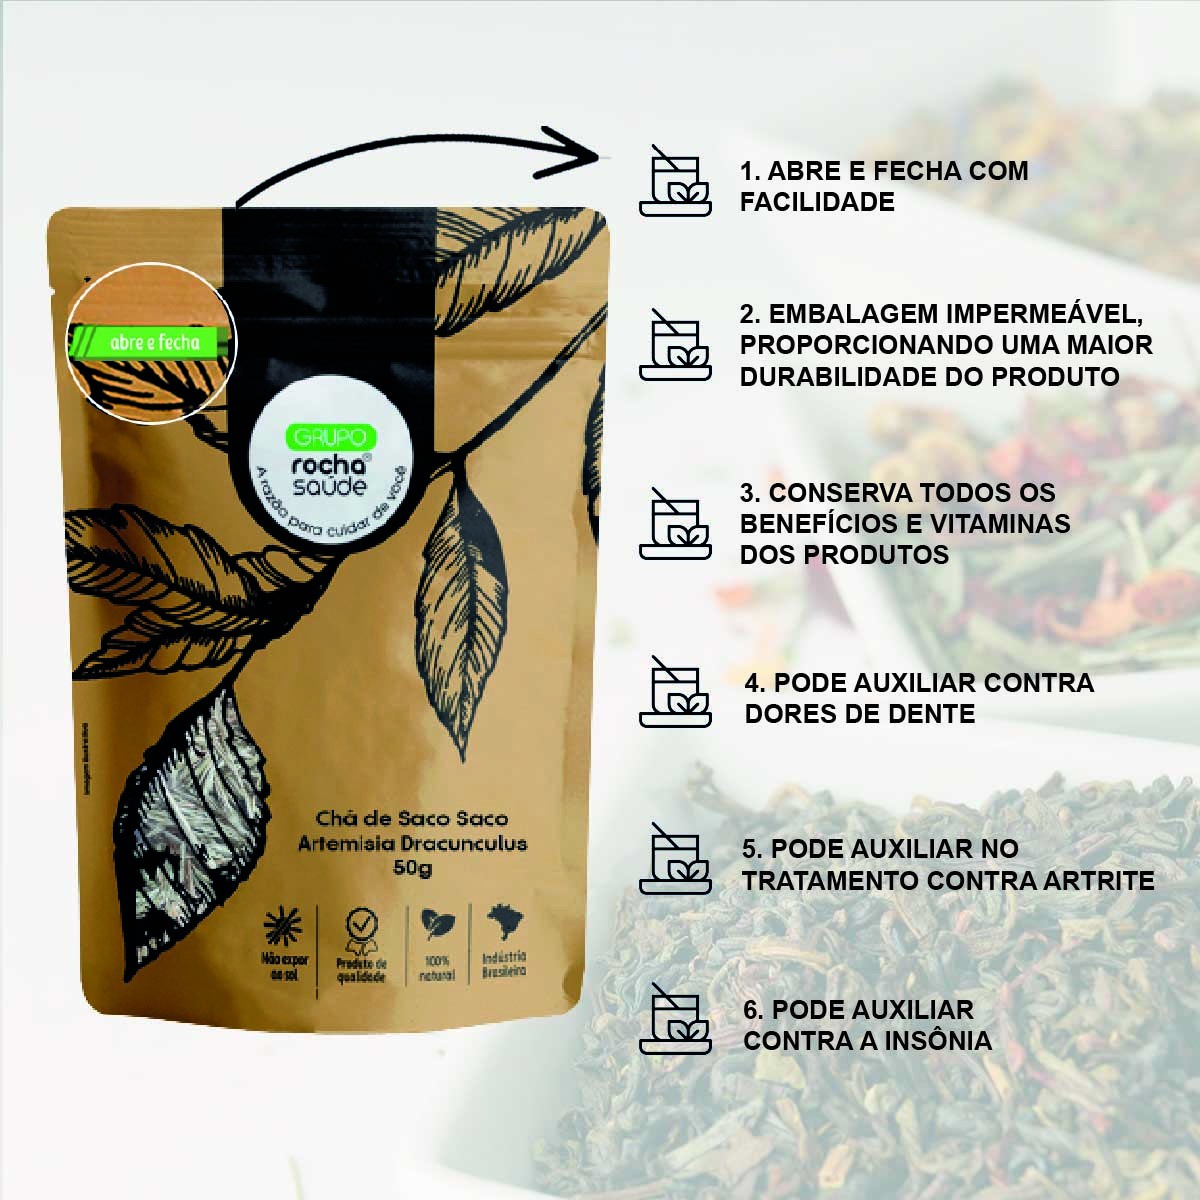 Chá de Saco Saco - Artemisia Dracunculus - 50g